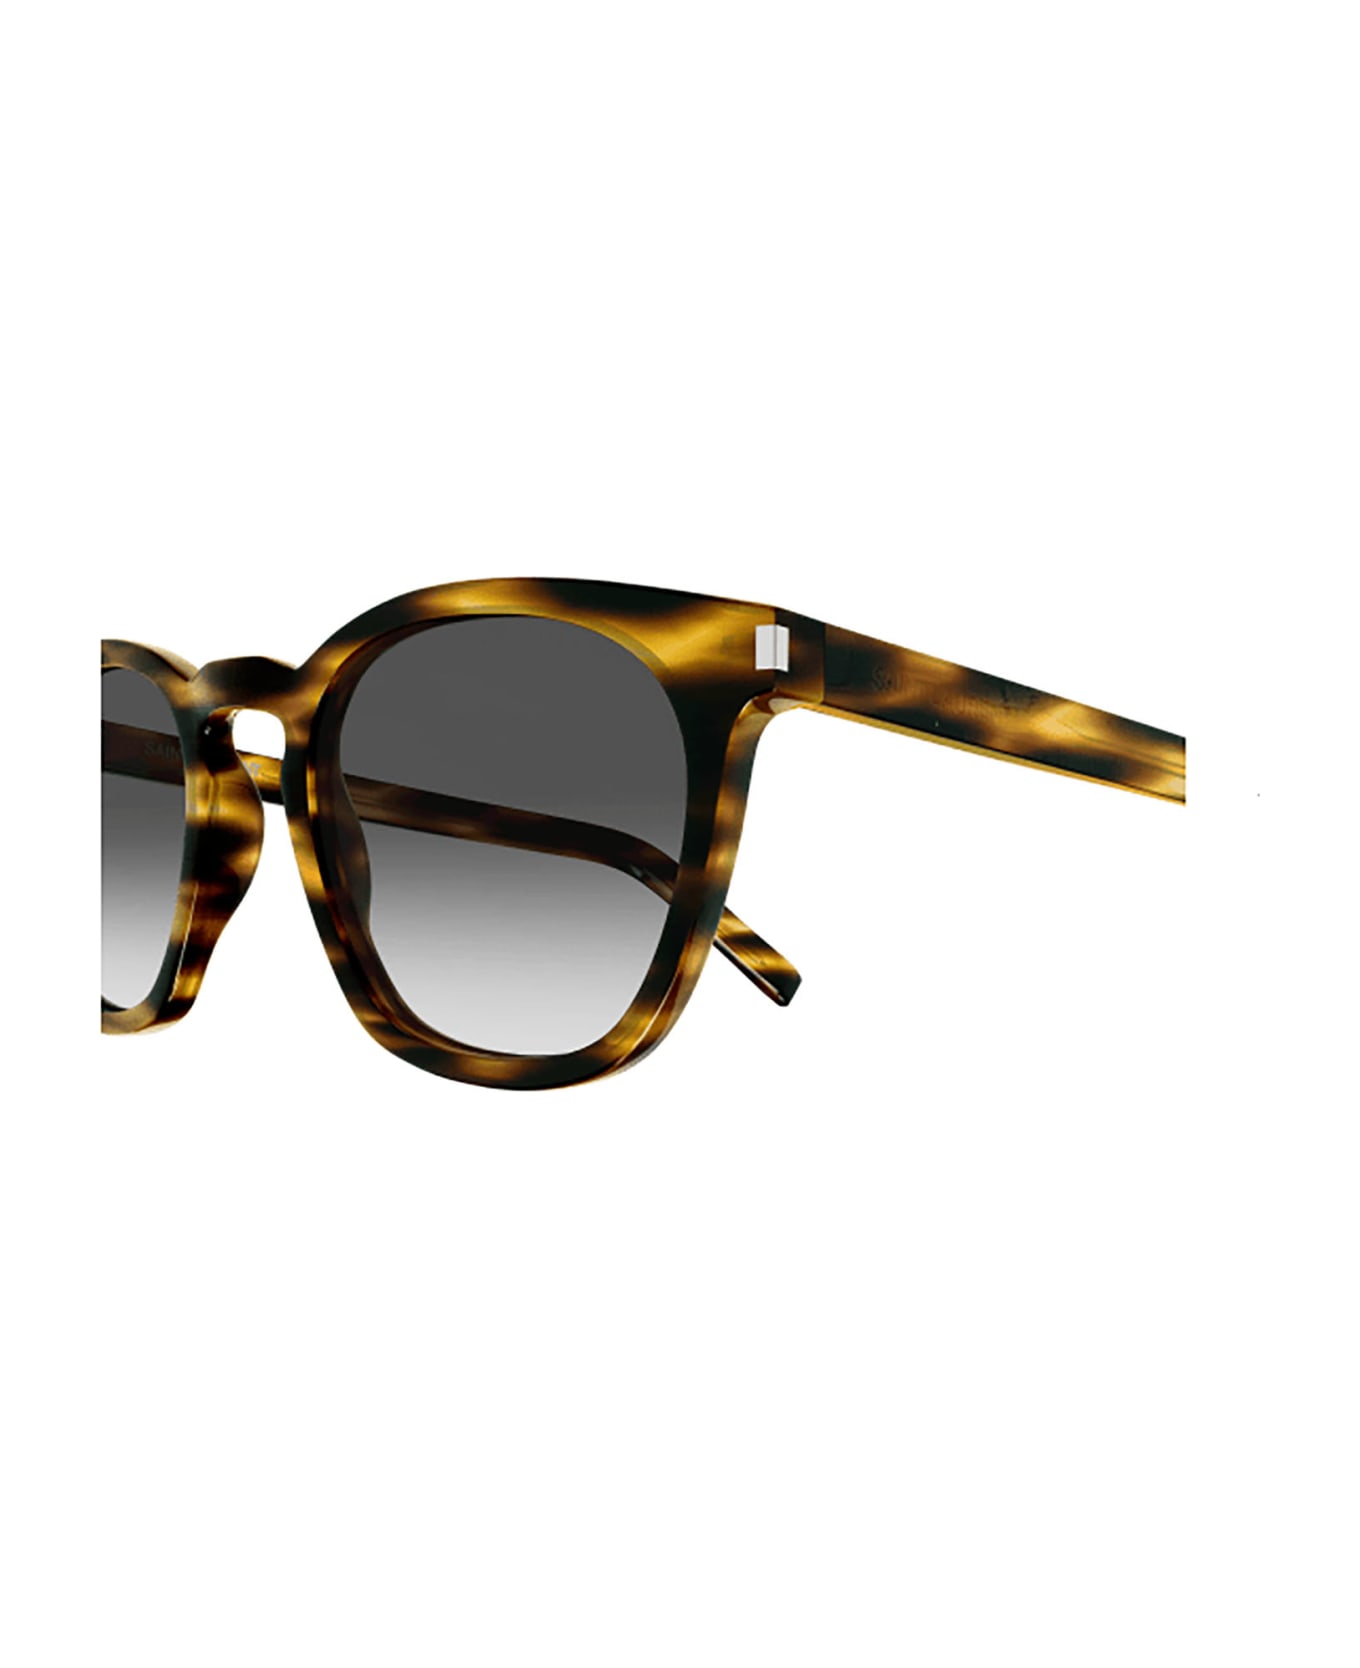 Saint Laurent Eyewear SL 28 Sunglasses - Havana Havana Grey